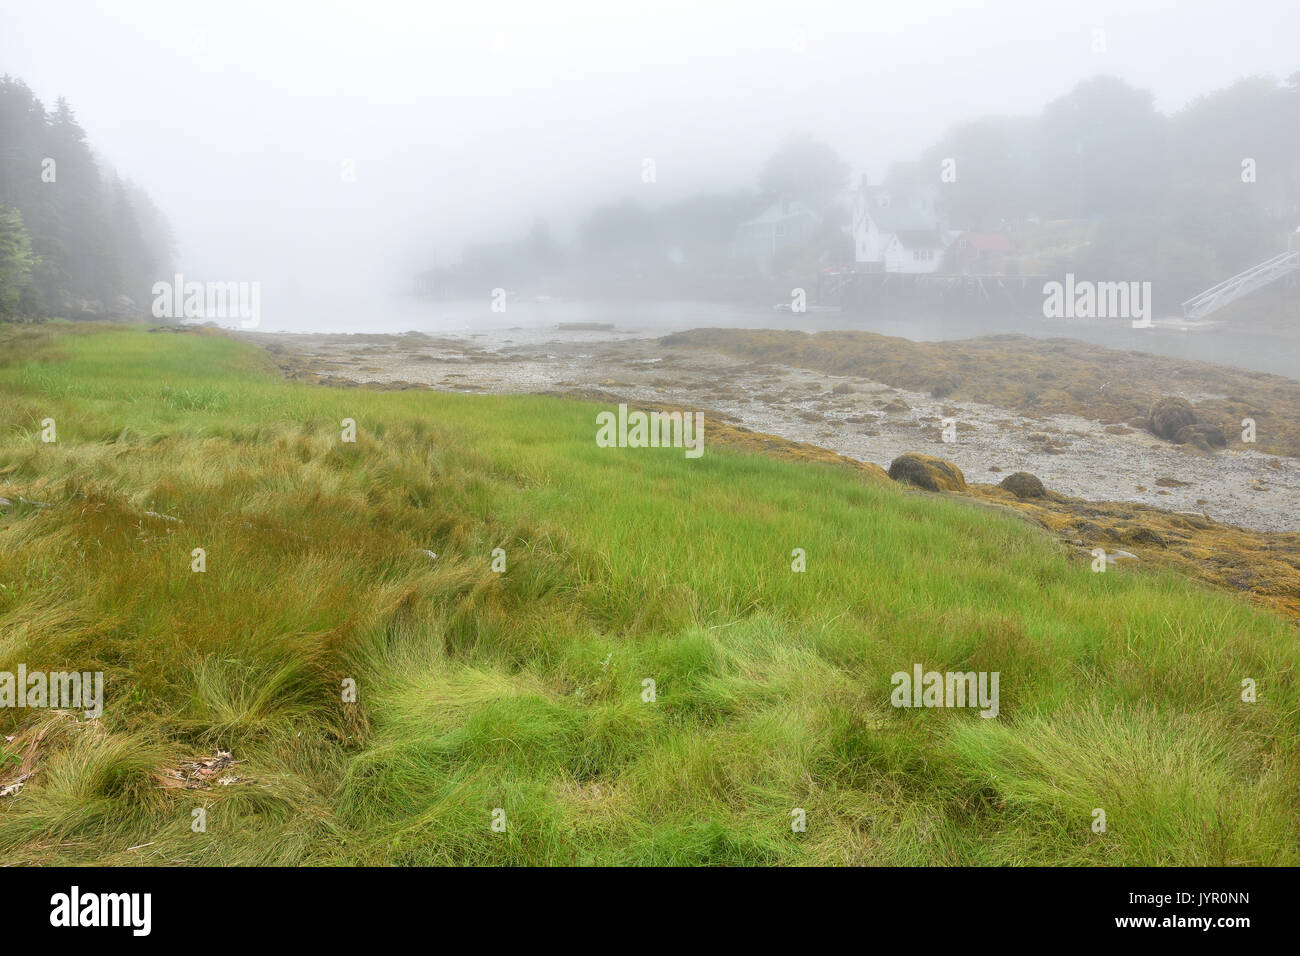 Pratt Island (Southport) - Looking towards Southport, Island on a foggy day Stock Photo